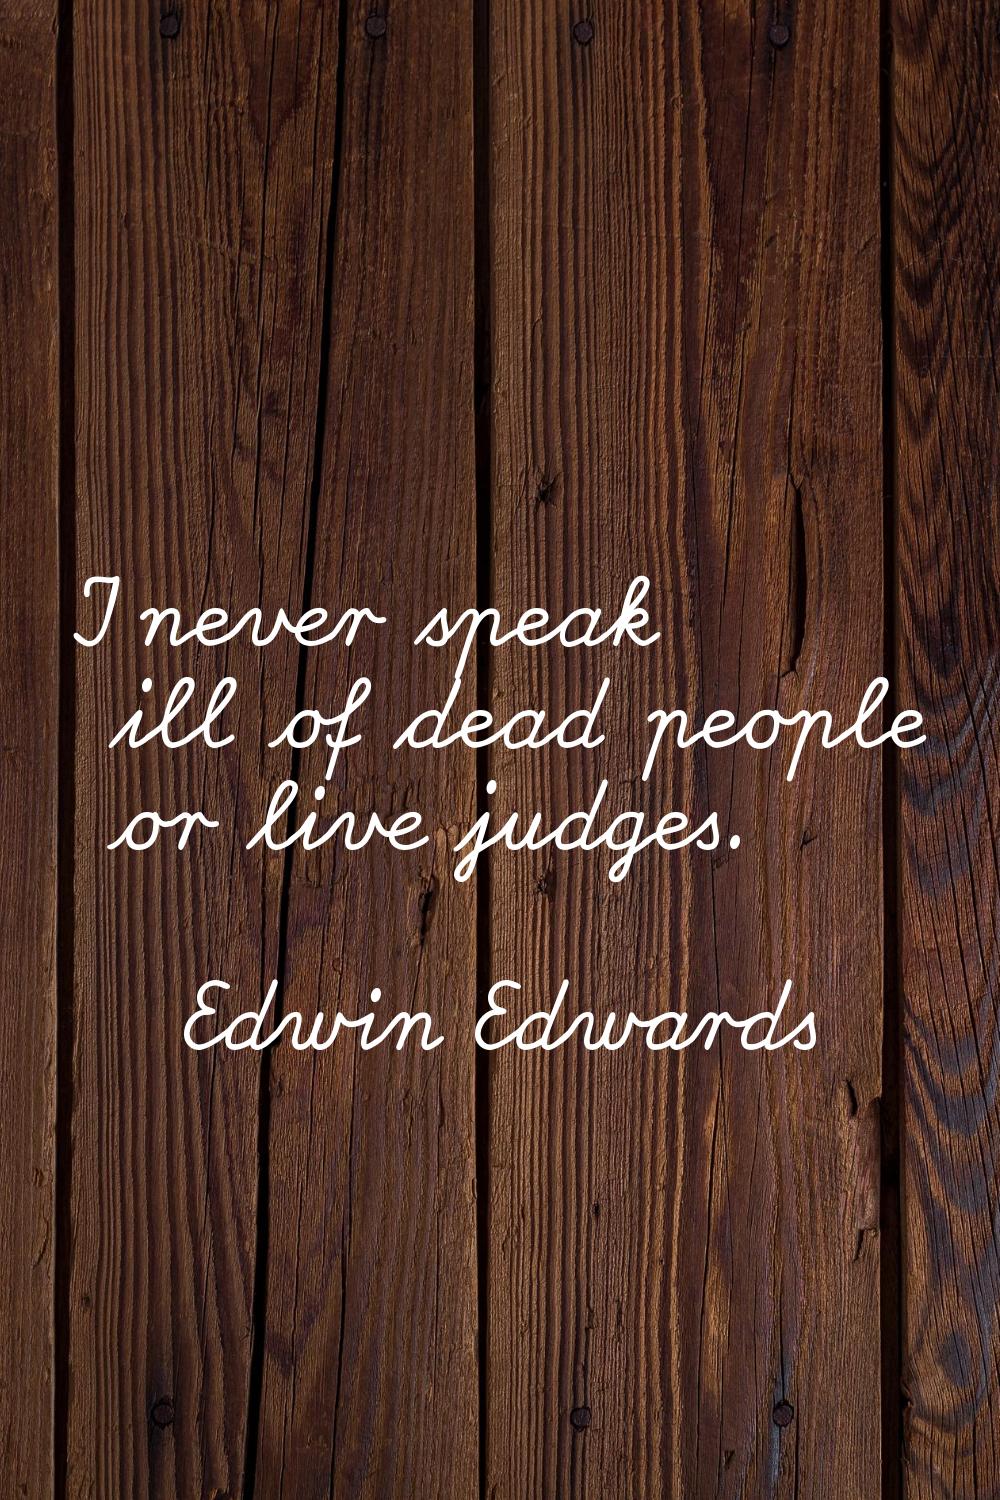 I never speak ill of dead people or live judges.